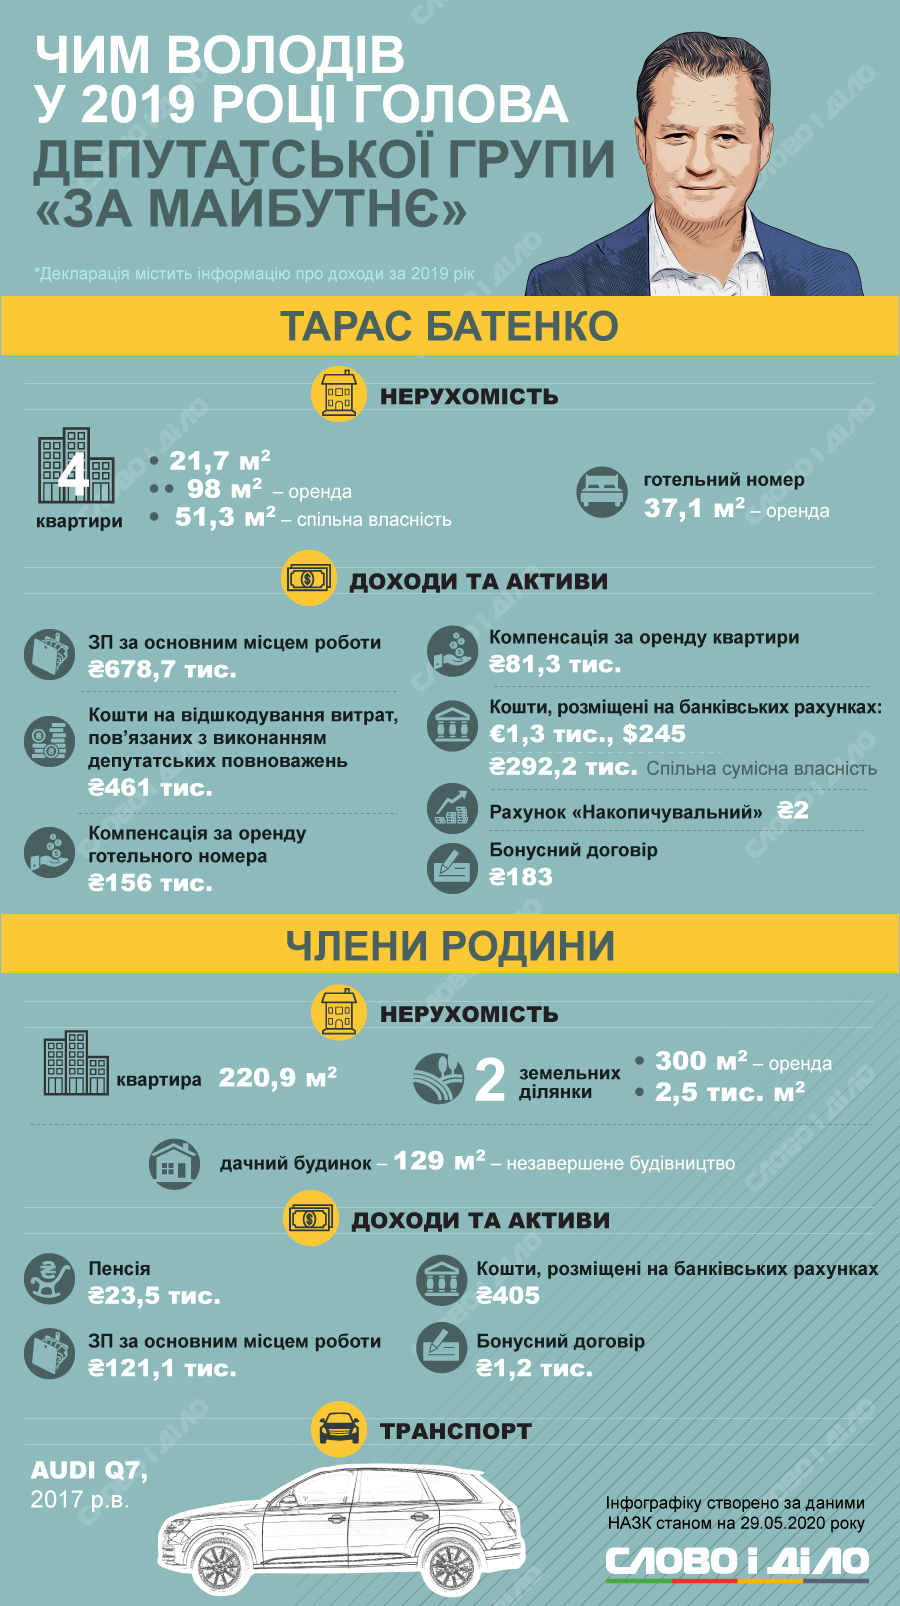 http://media.slovoidilo.ua/media/infographics/12/111912/111912-1_uk_origin.png